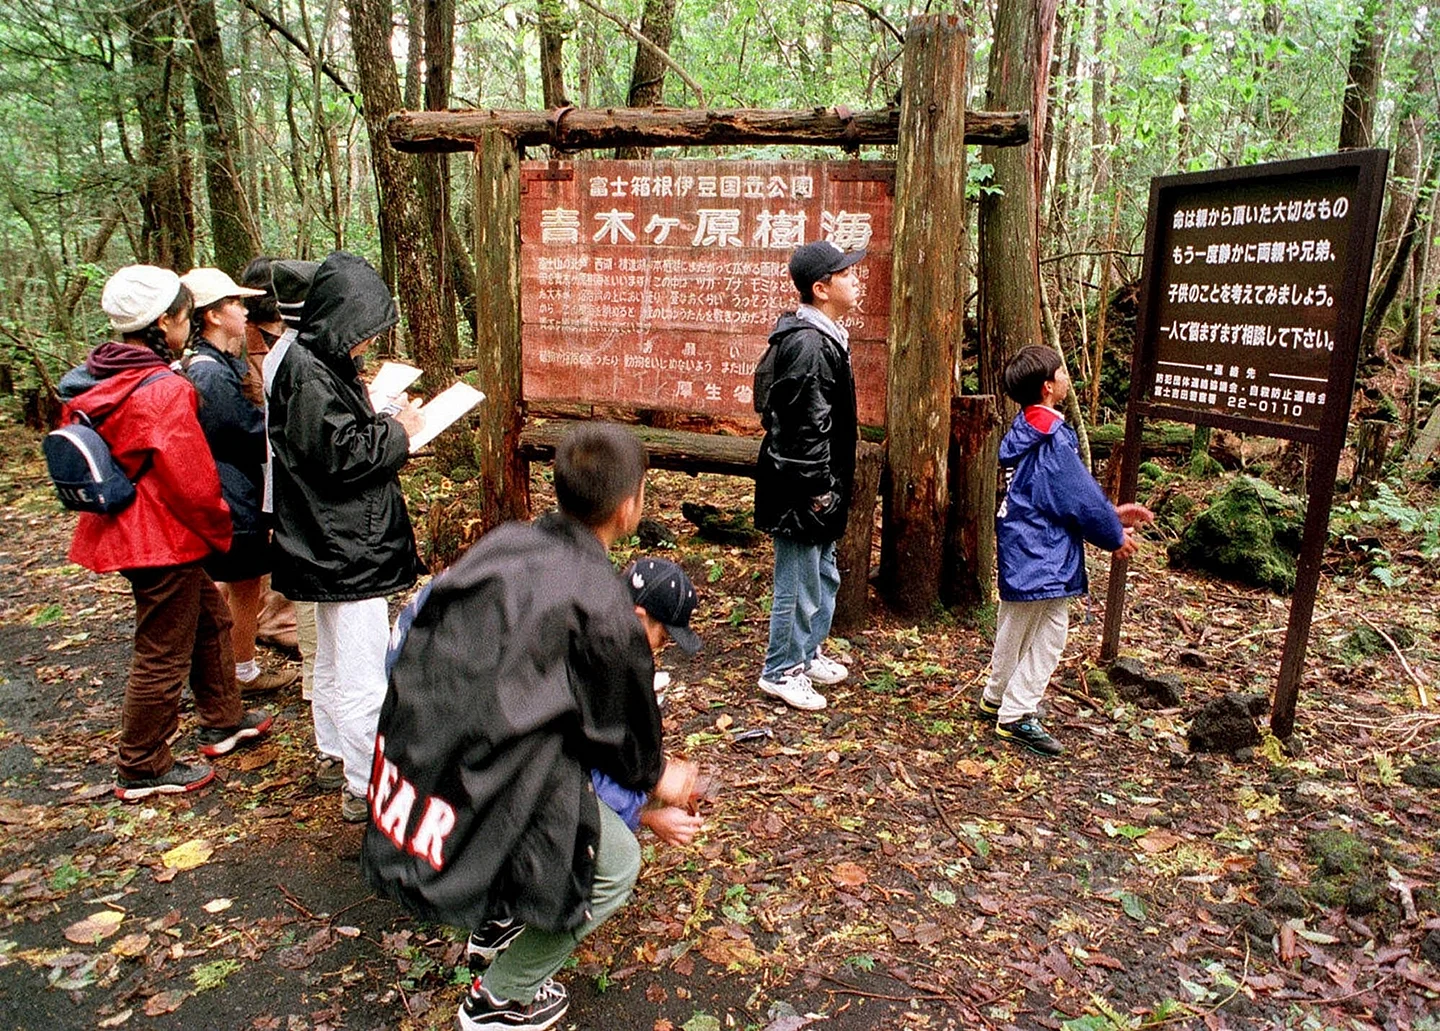 Аокигахара - лес самоубийств в Японии